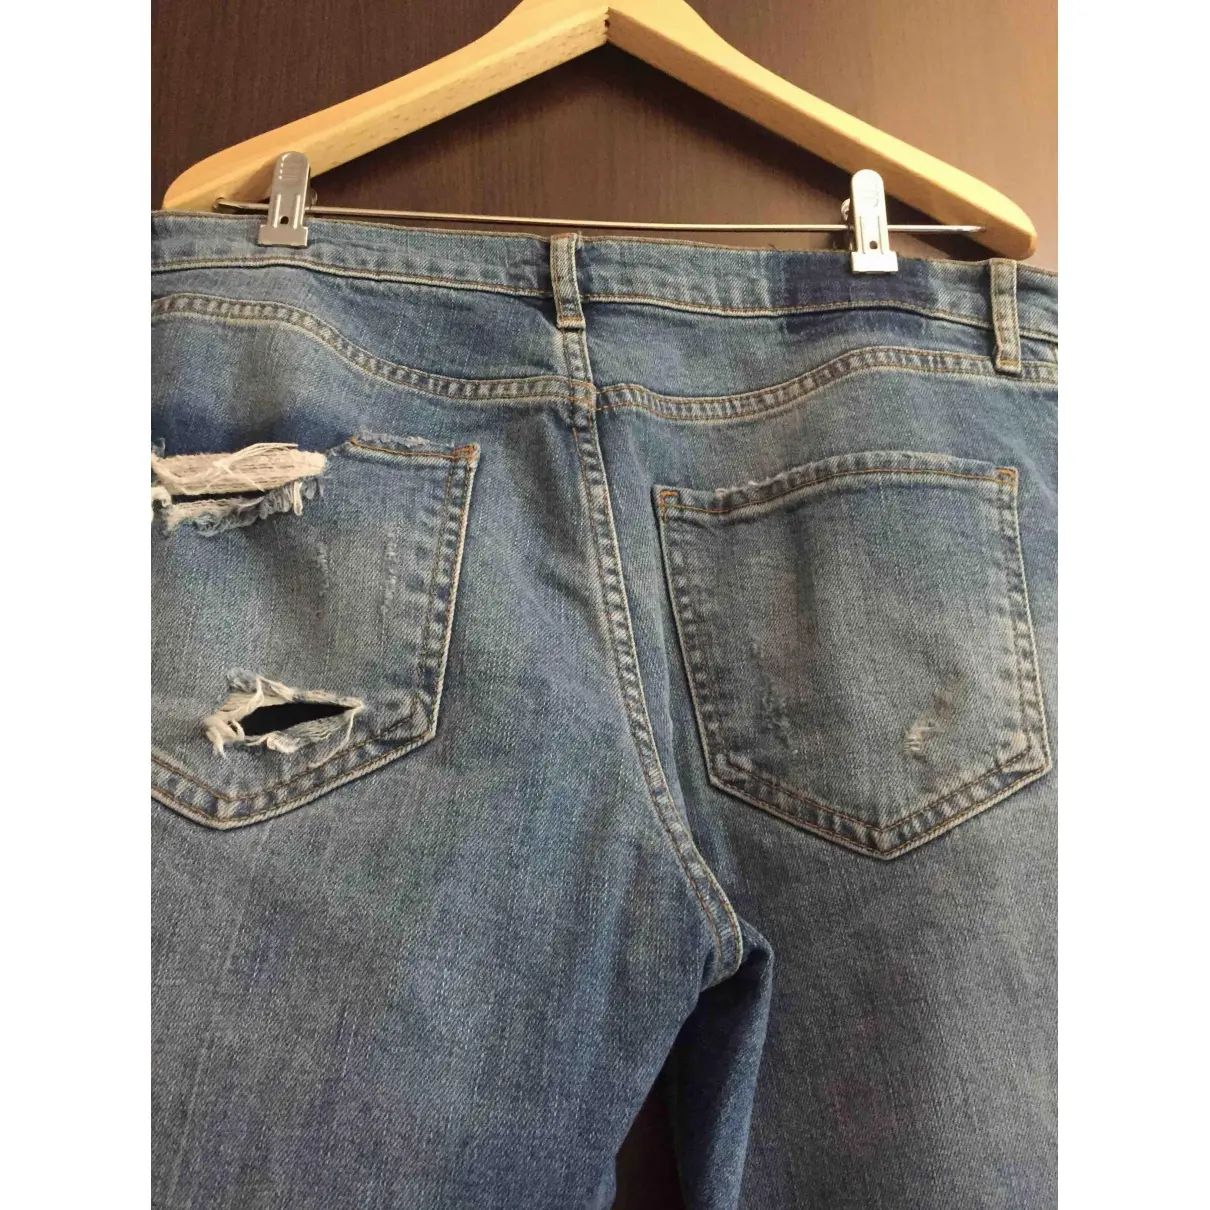 Buy Zara Cotton - elasthane Jeans online